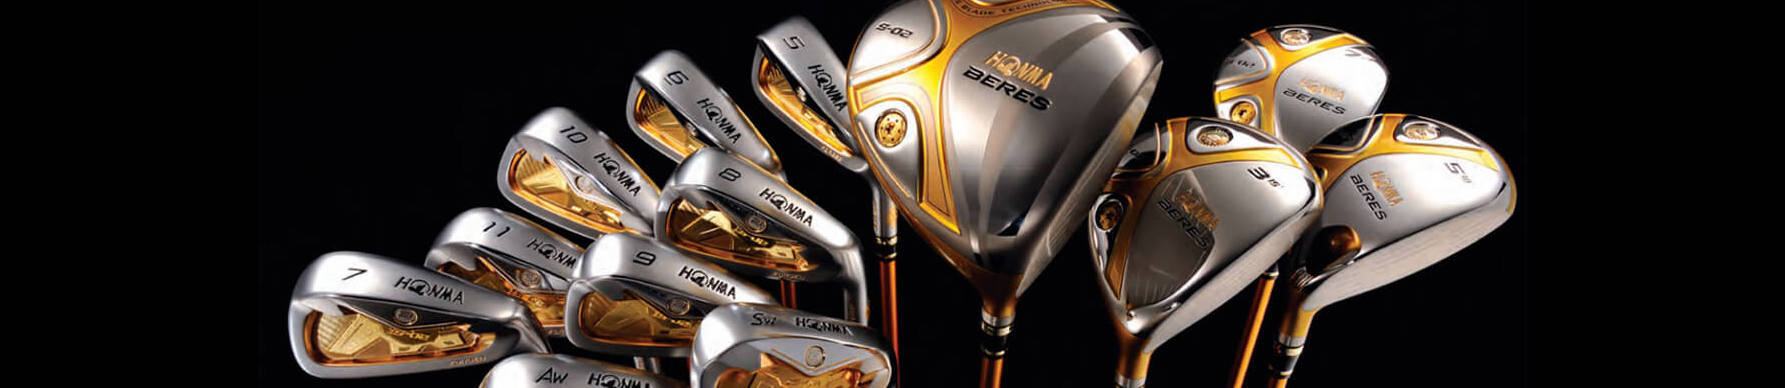 golf clubs expensive wonders of luxury